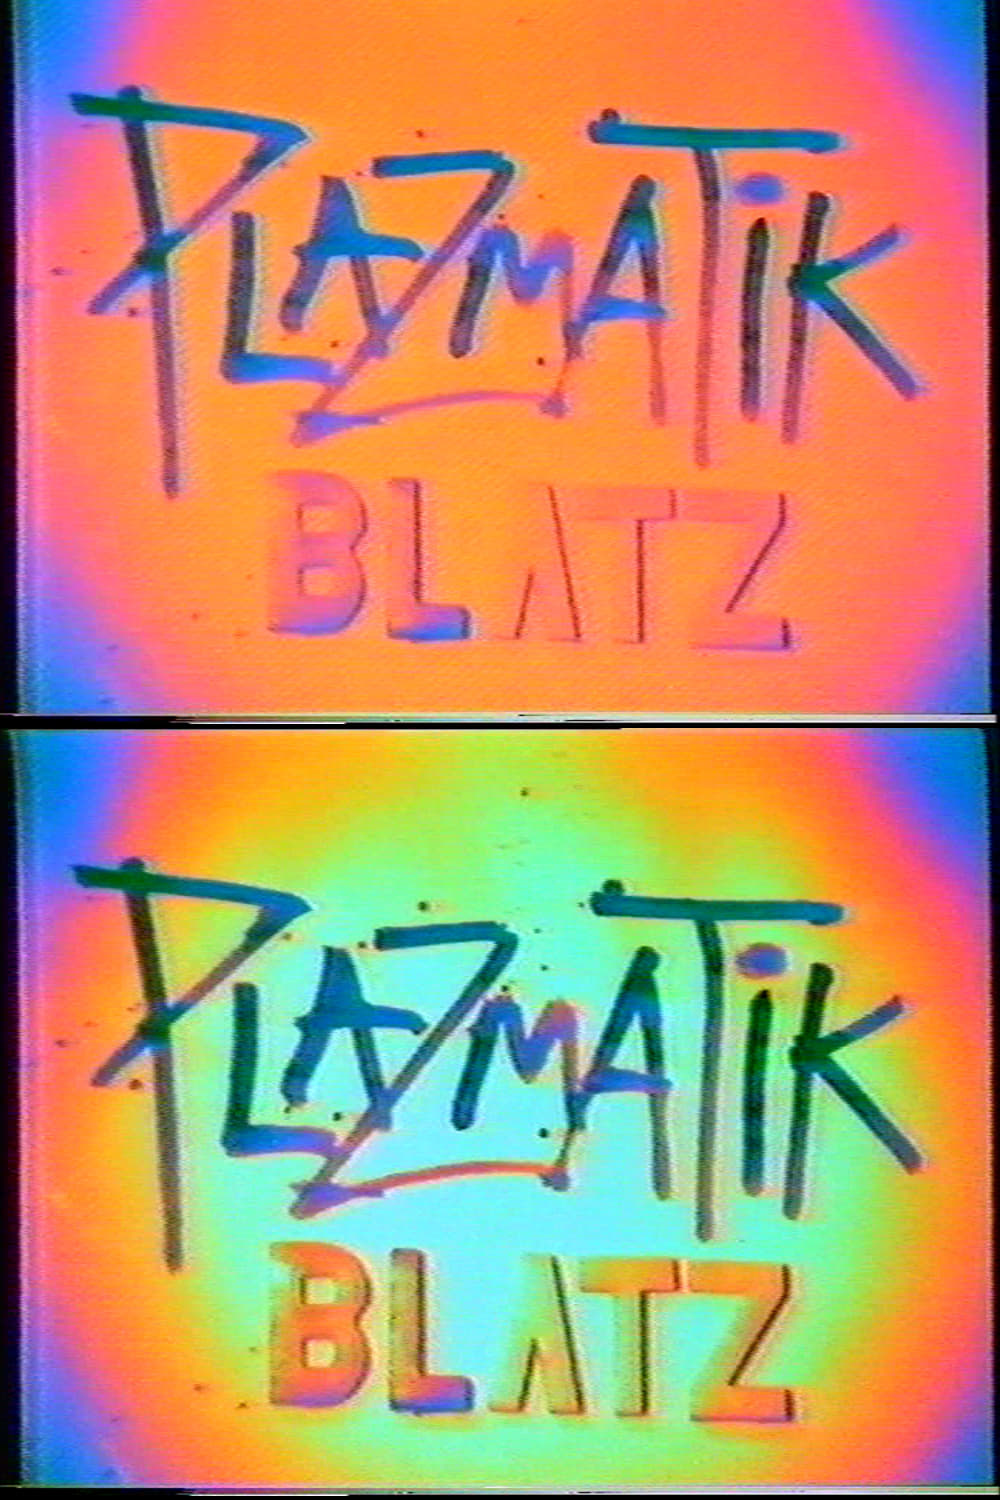 Plazmatic Blatz